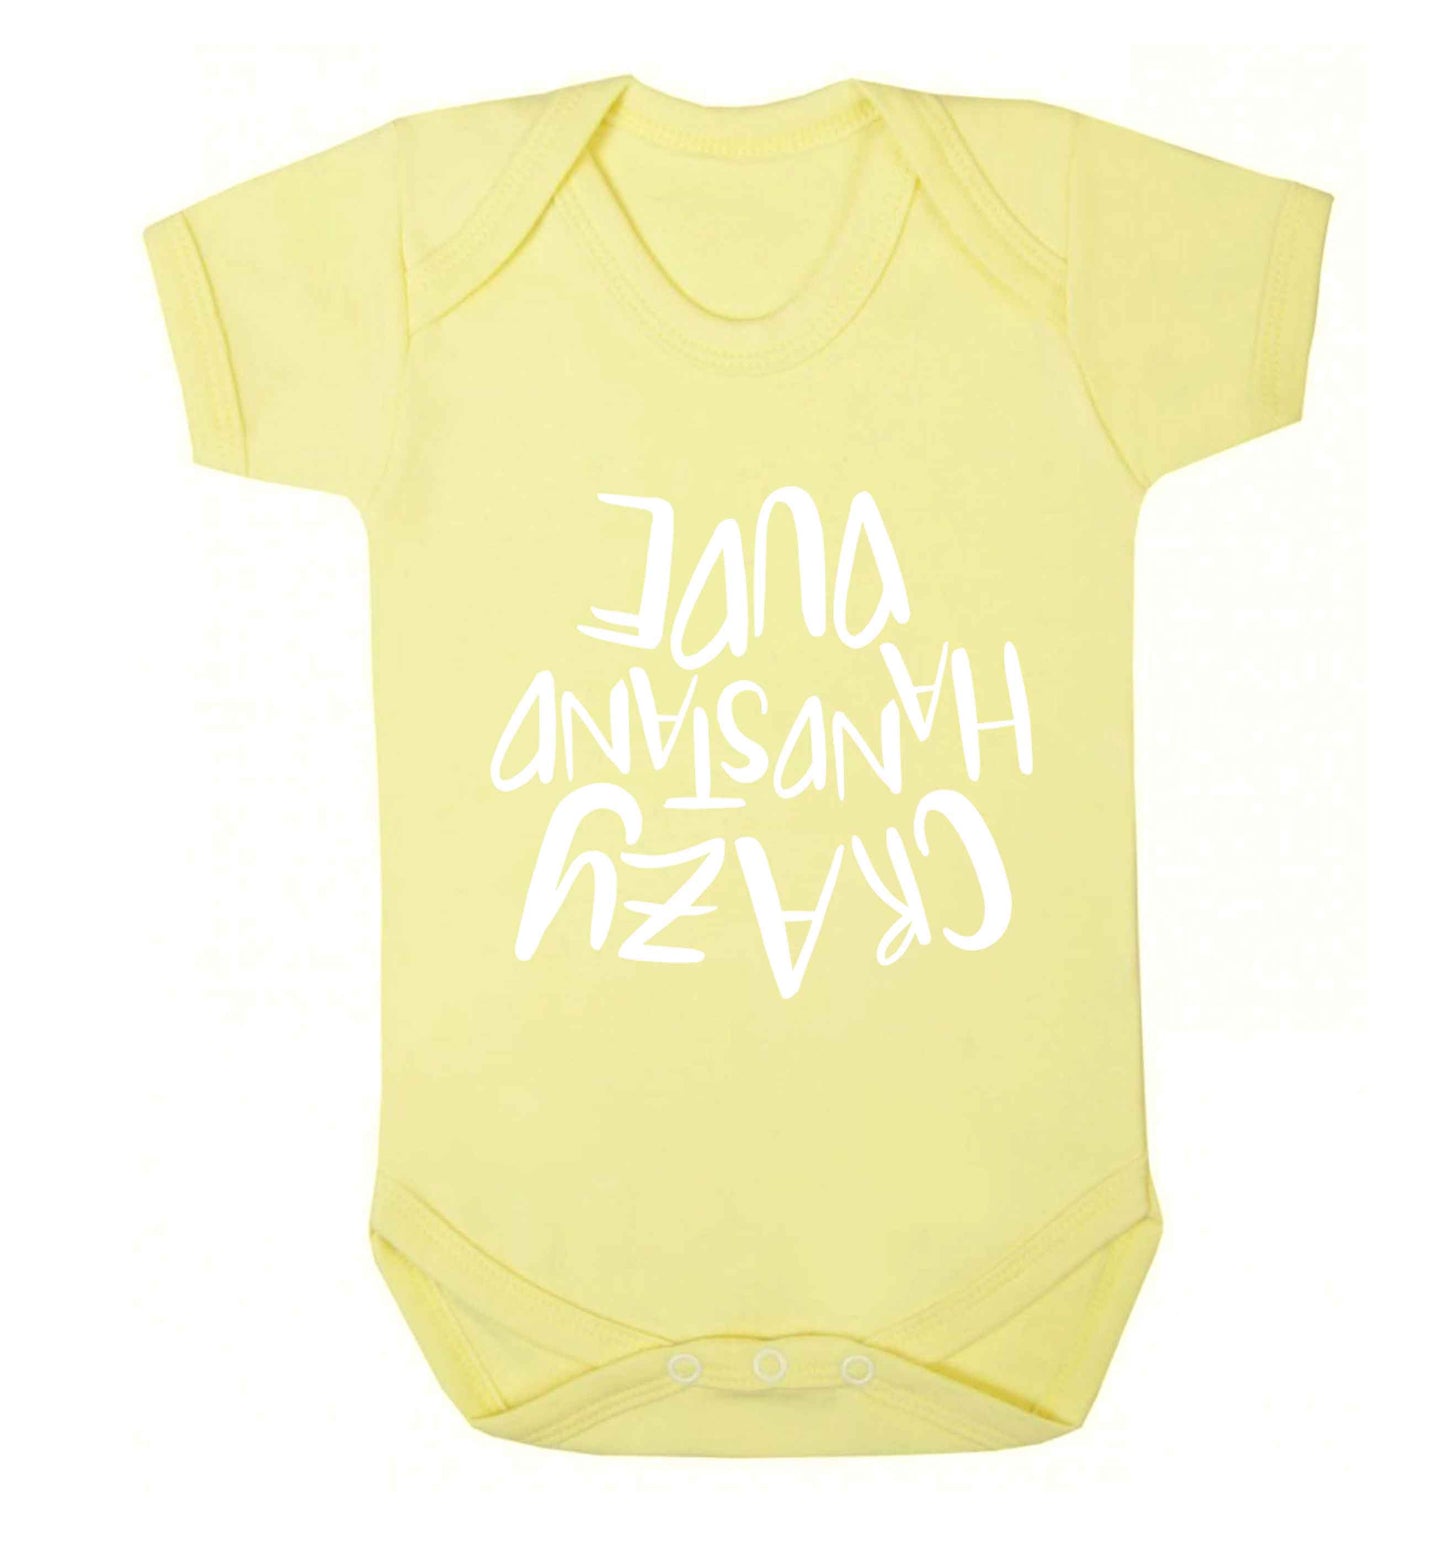 Crazy handstand dude Baby Vest pale yellow 18-24 months